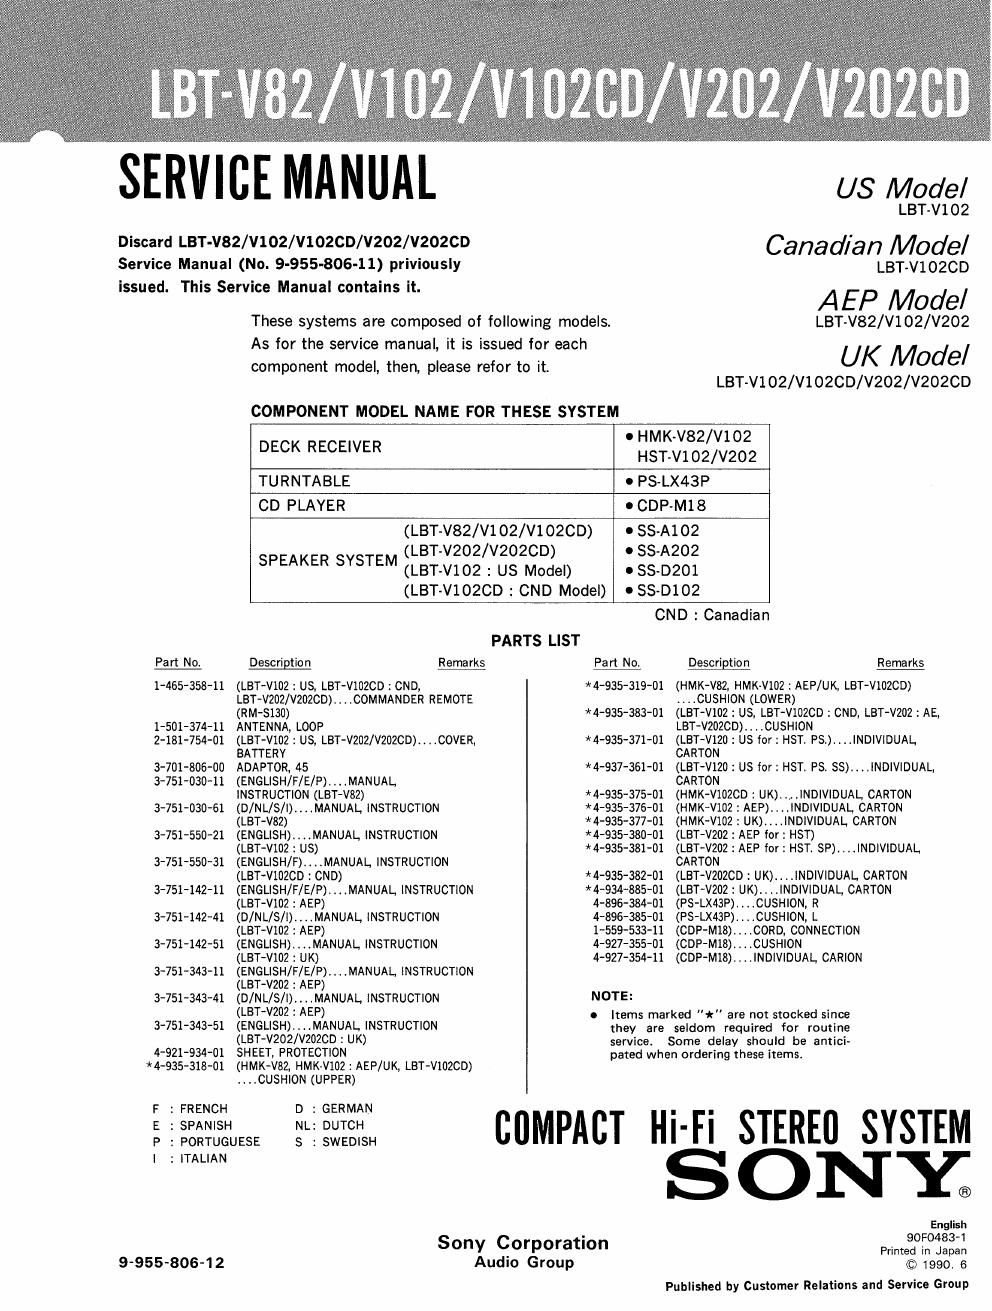 sony lbt v 102 cd service manual